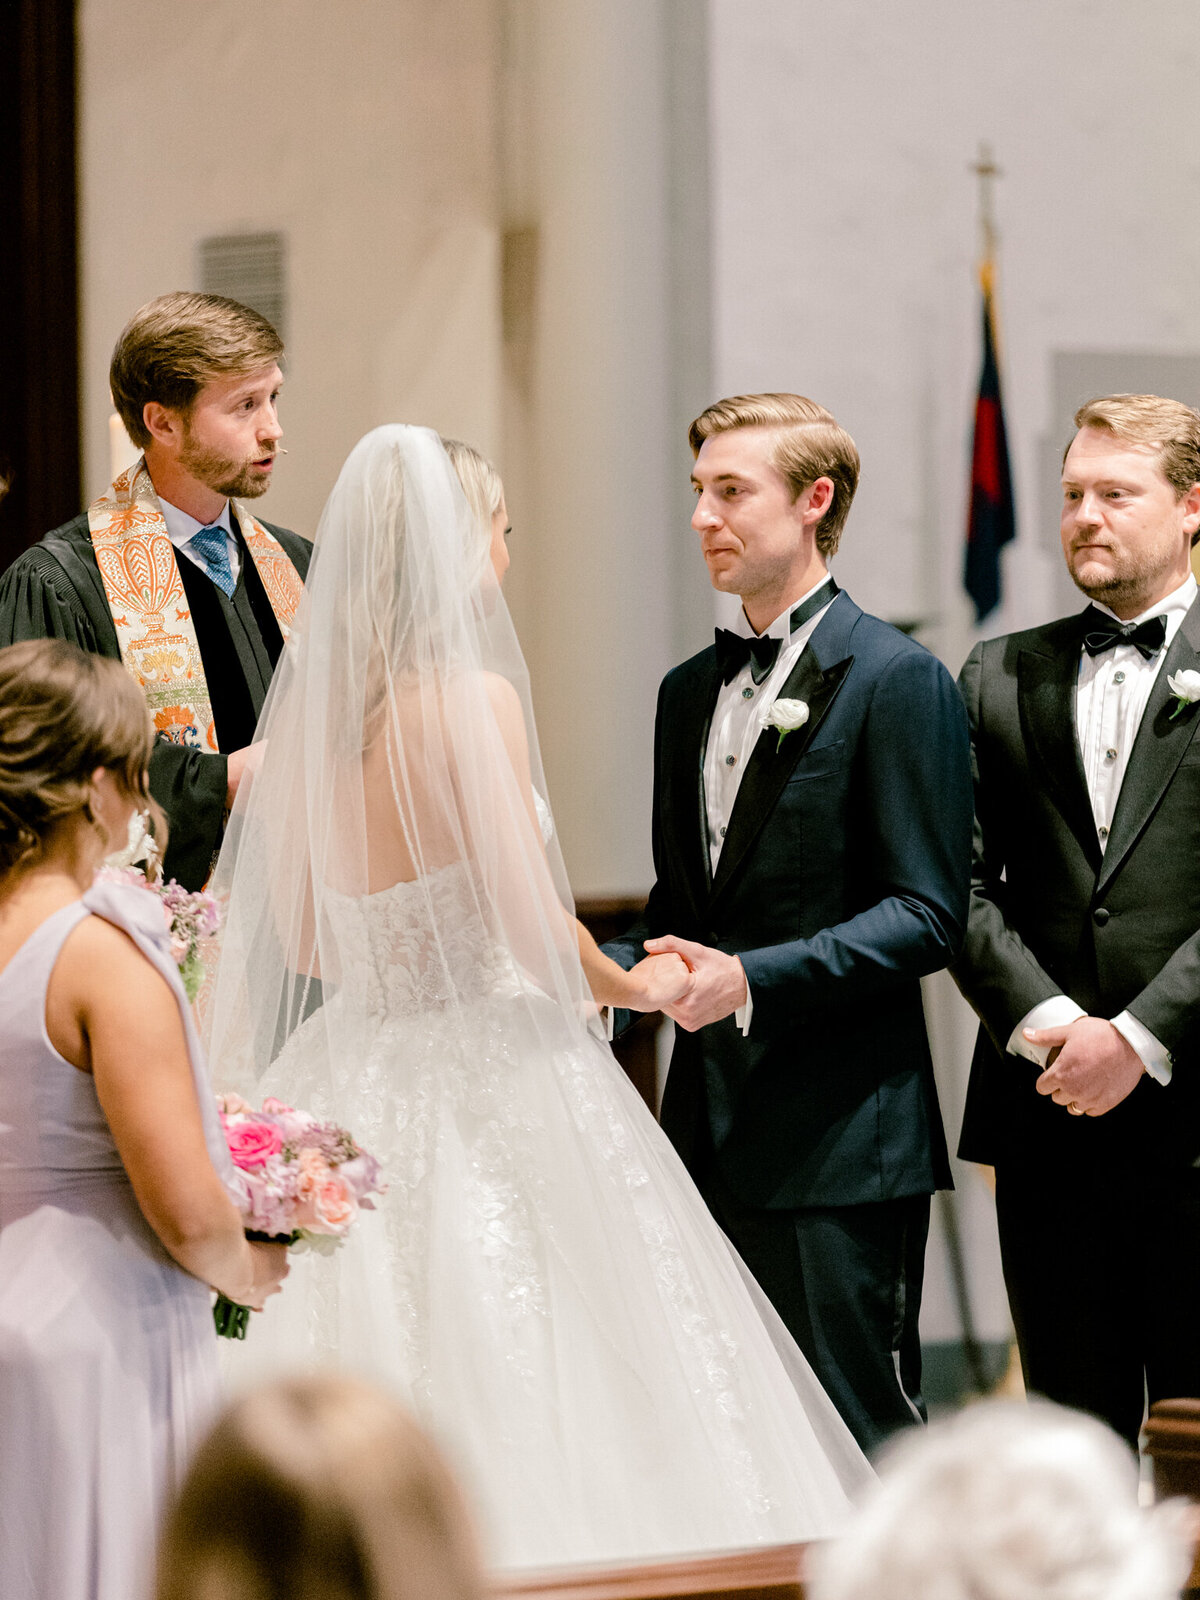 Shelby & Thomas's Wedding at HPUMC The Room on Main | Dallas Wedding Photographer | Sami Kathryn Photography-119